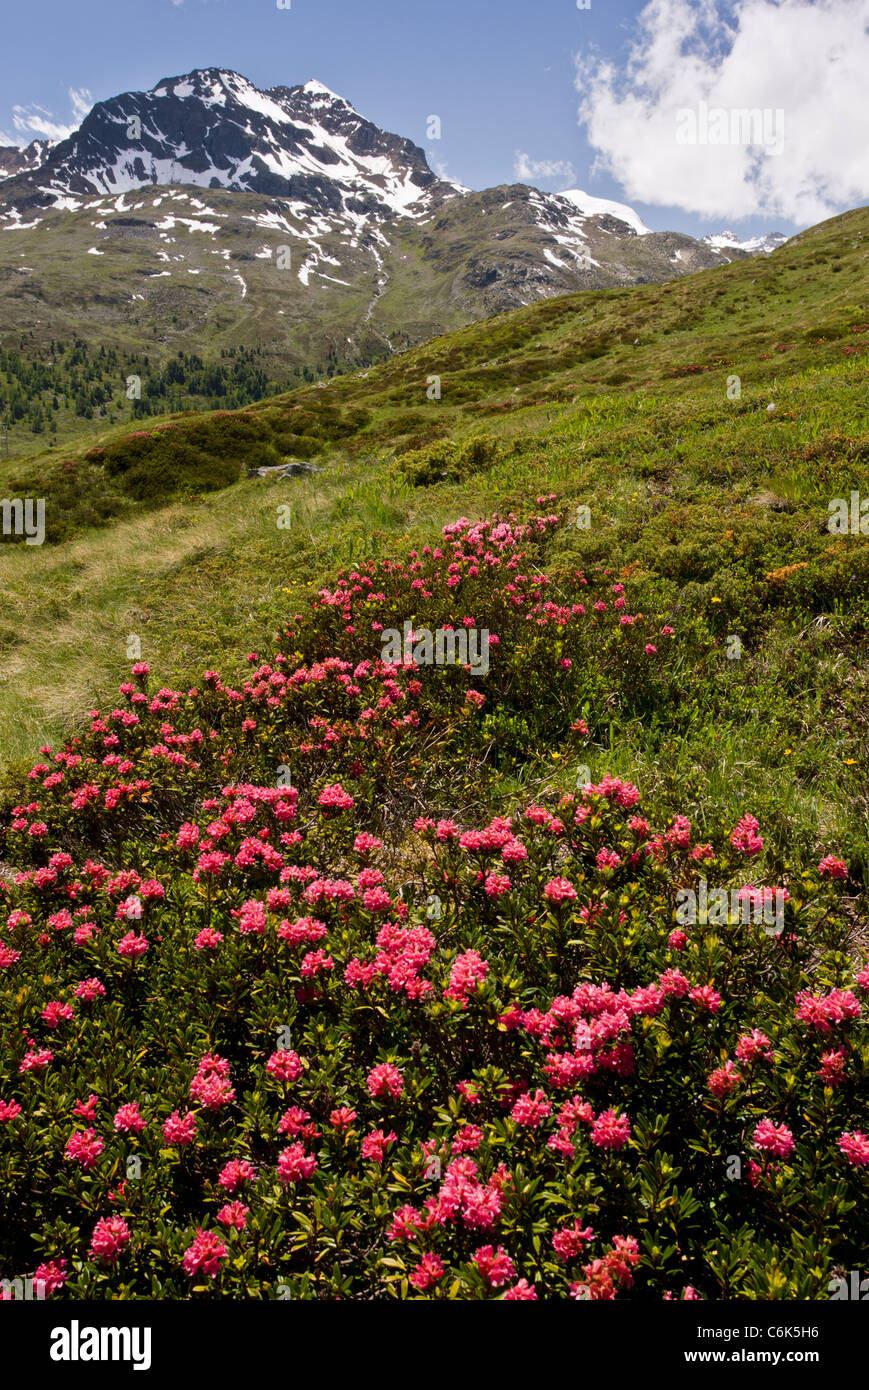 Alpenrose, Rhododendron ferrugineum in flower on mountain slope, Engadin valley, Switzerland Stock Photo